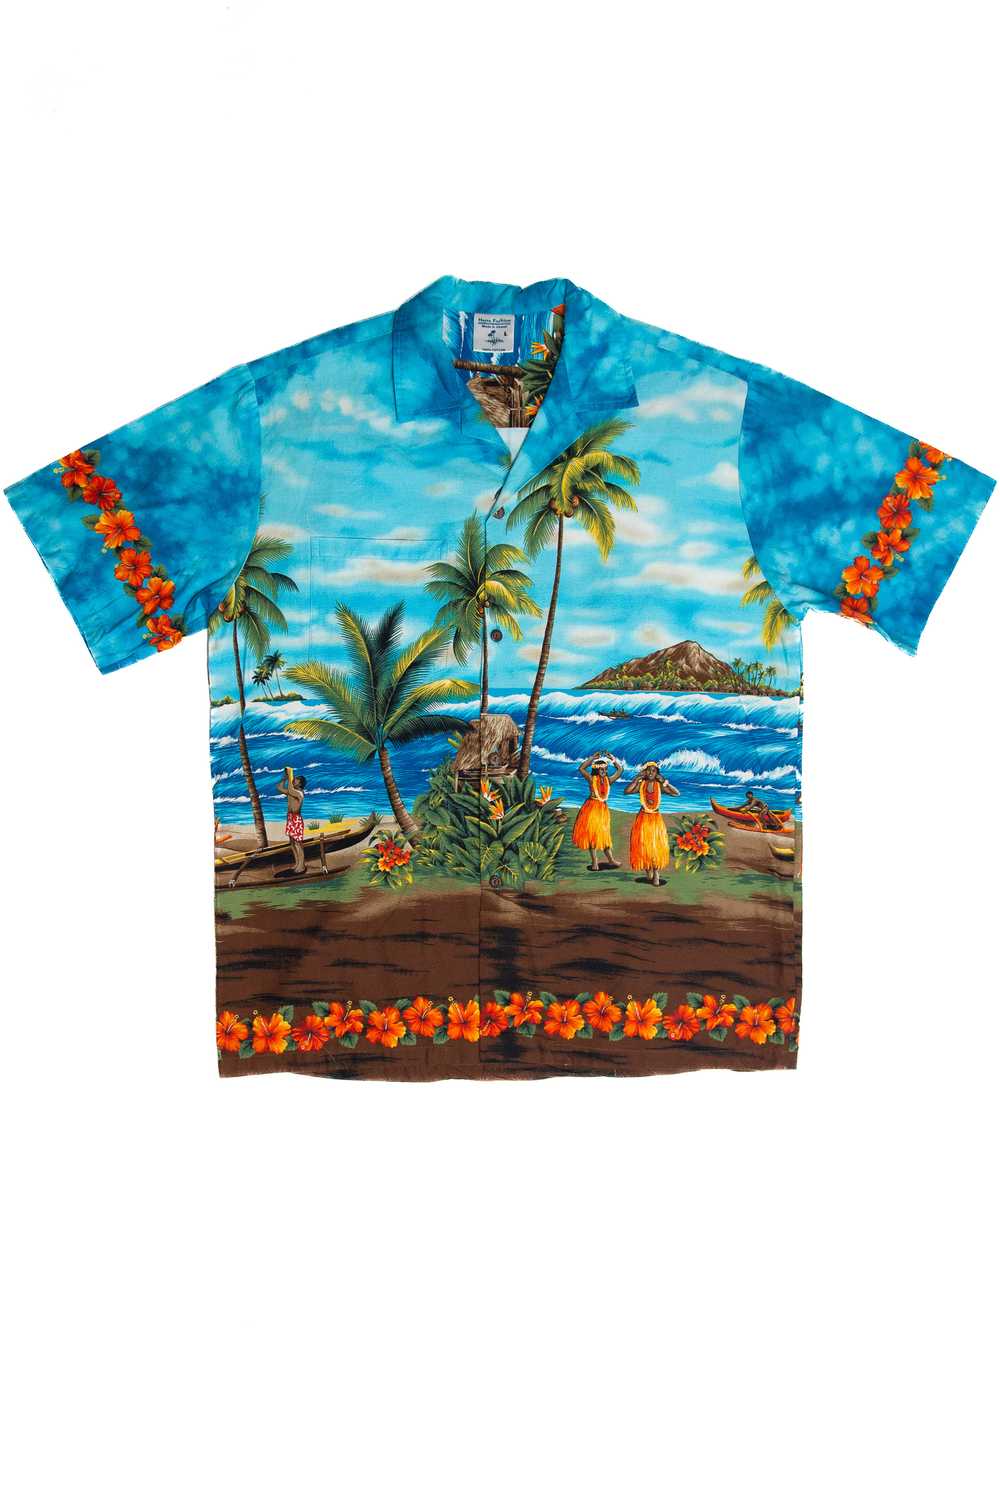 Vintage Hana Fashion Hawaiian Shirt - image 1